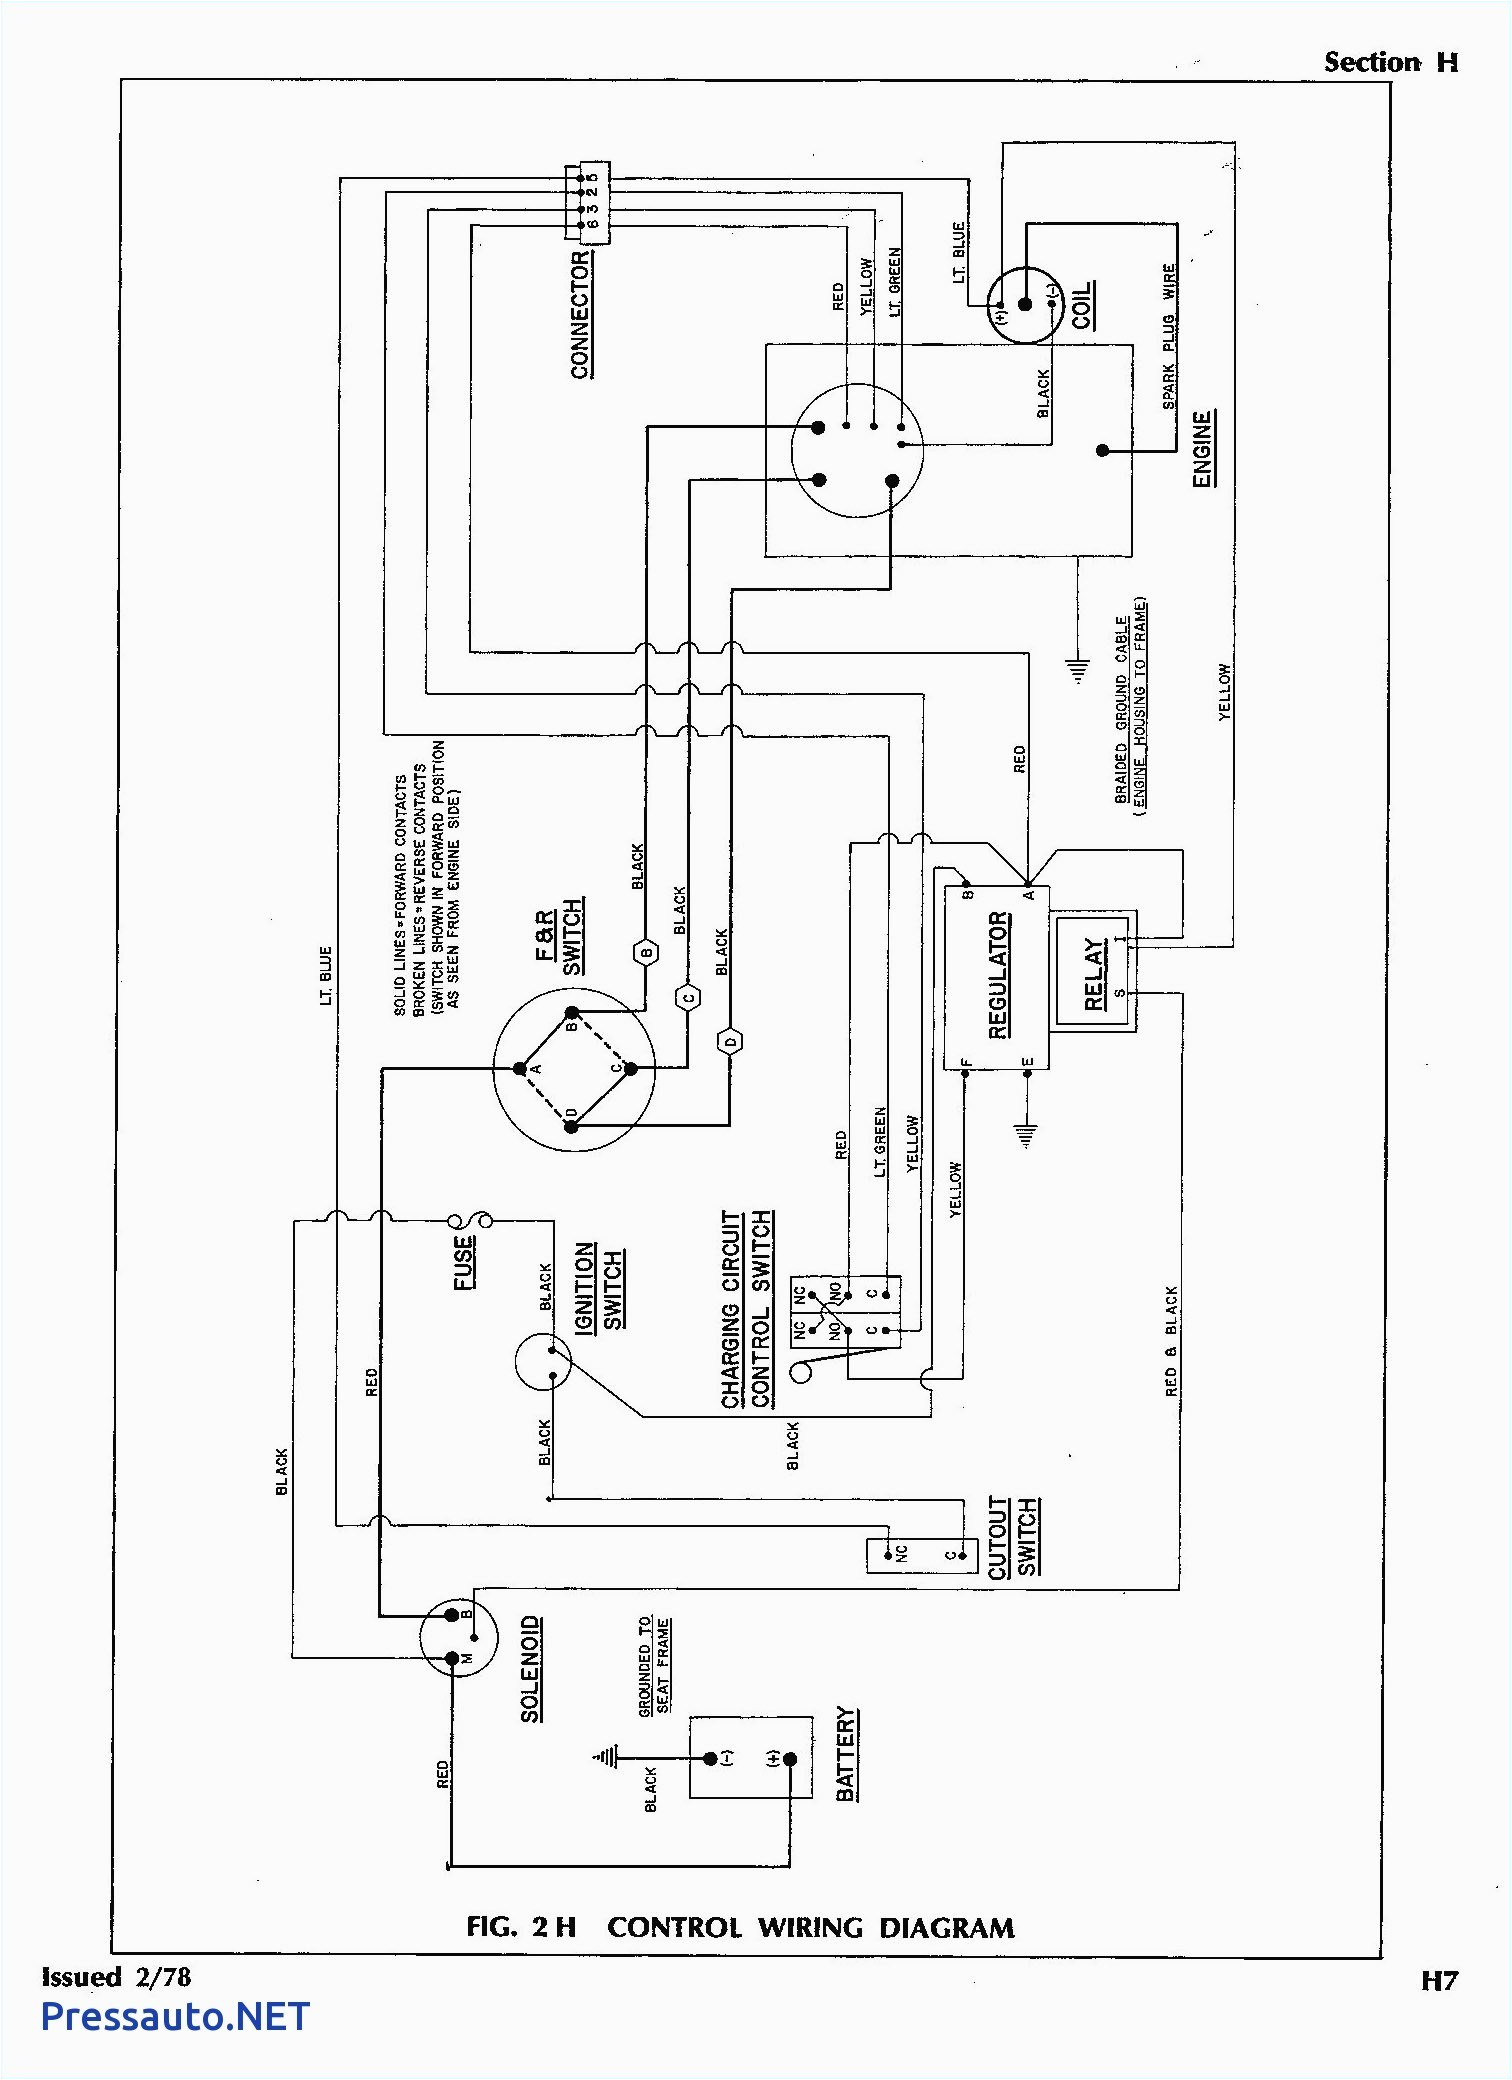 1990 ezgo gas wiring diagram wiring diagram view 1992 ez go wiring diagram